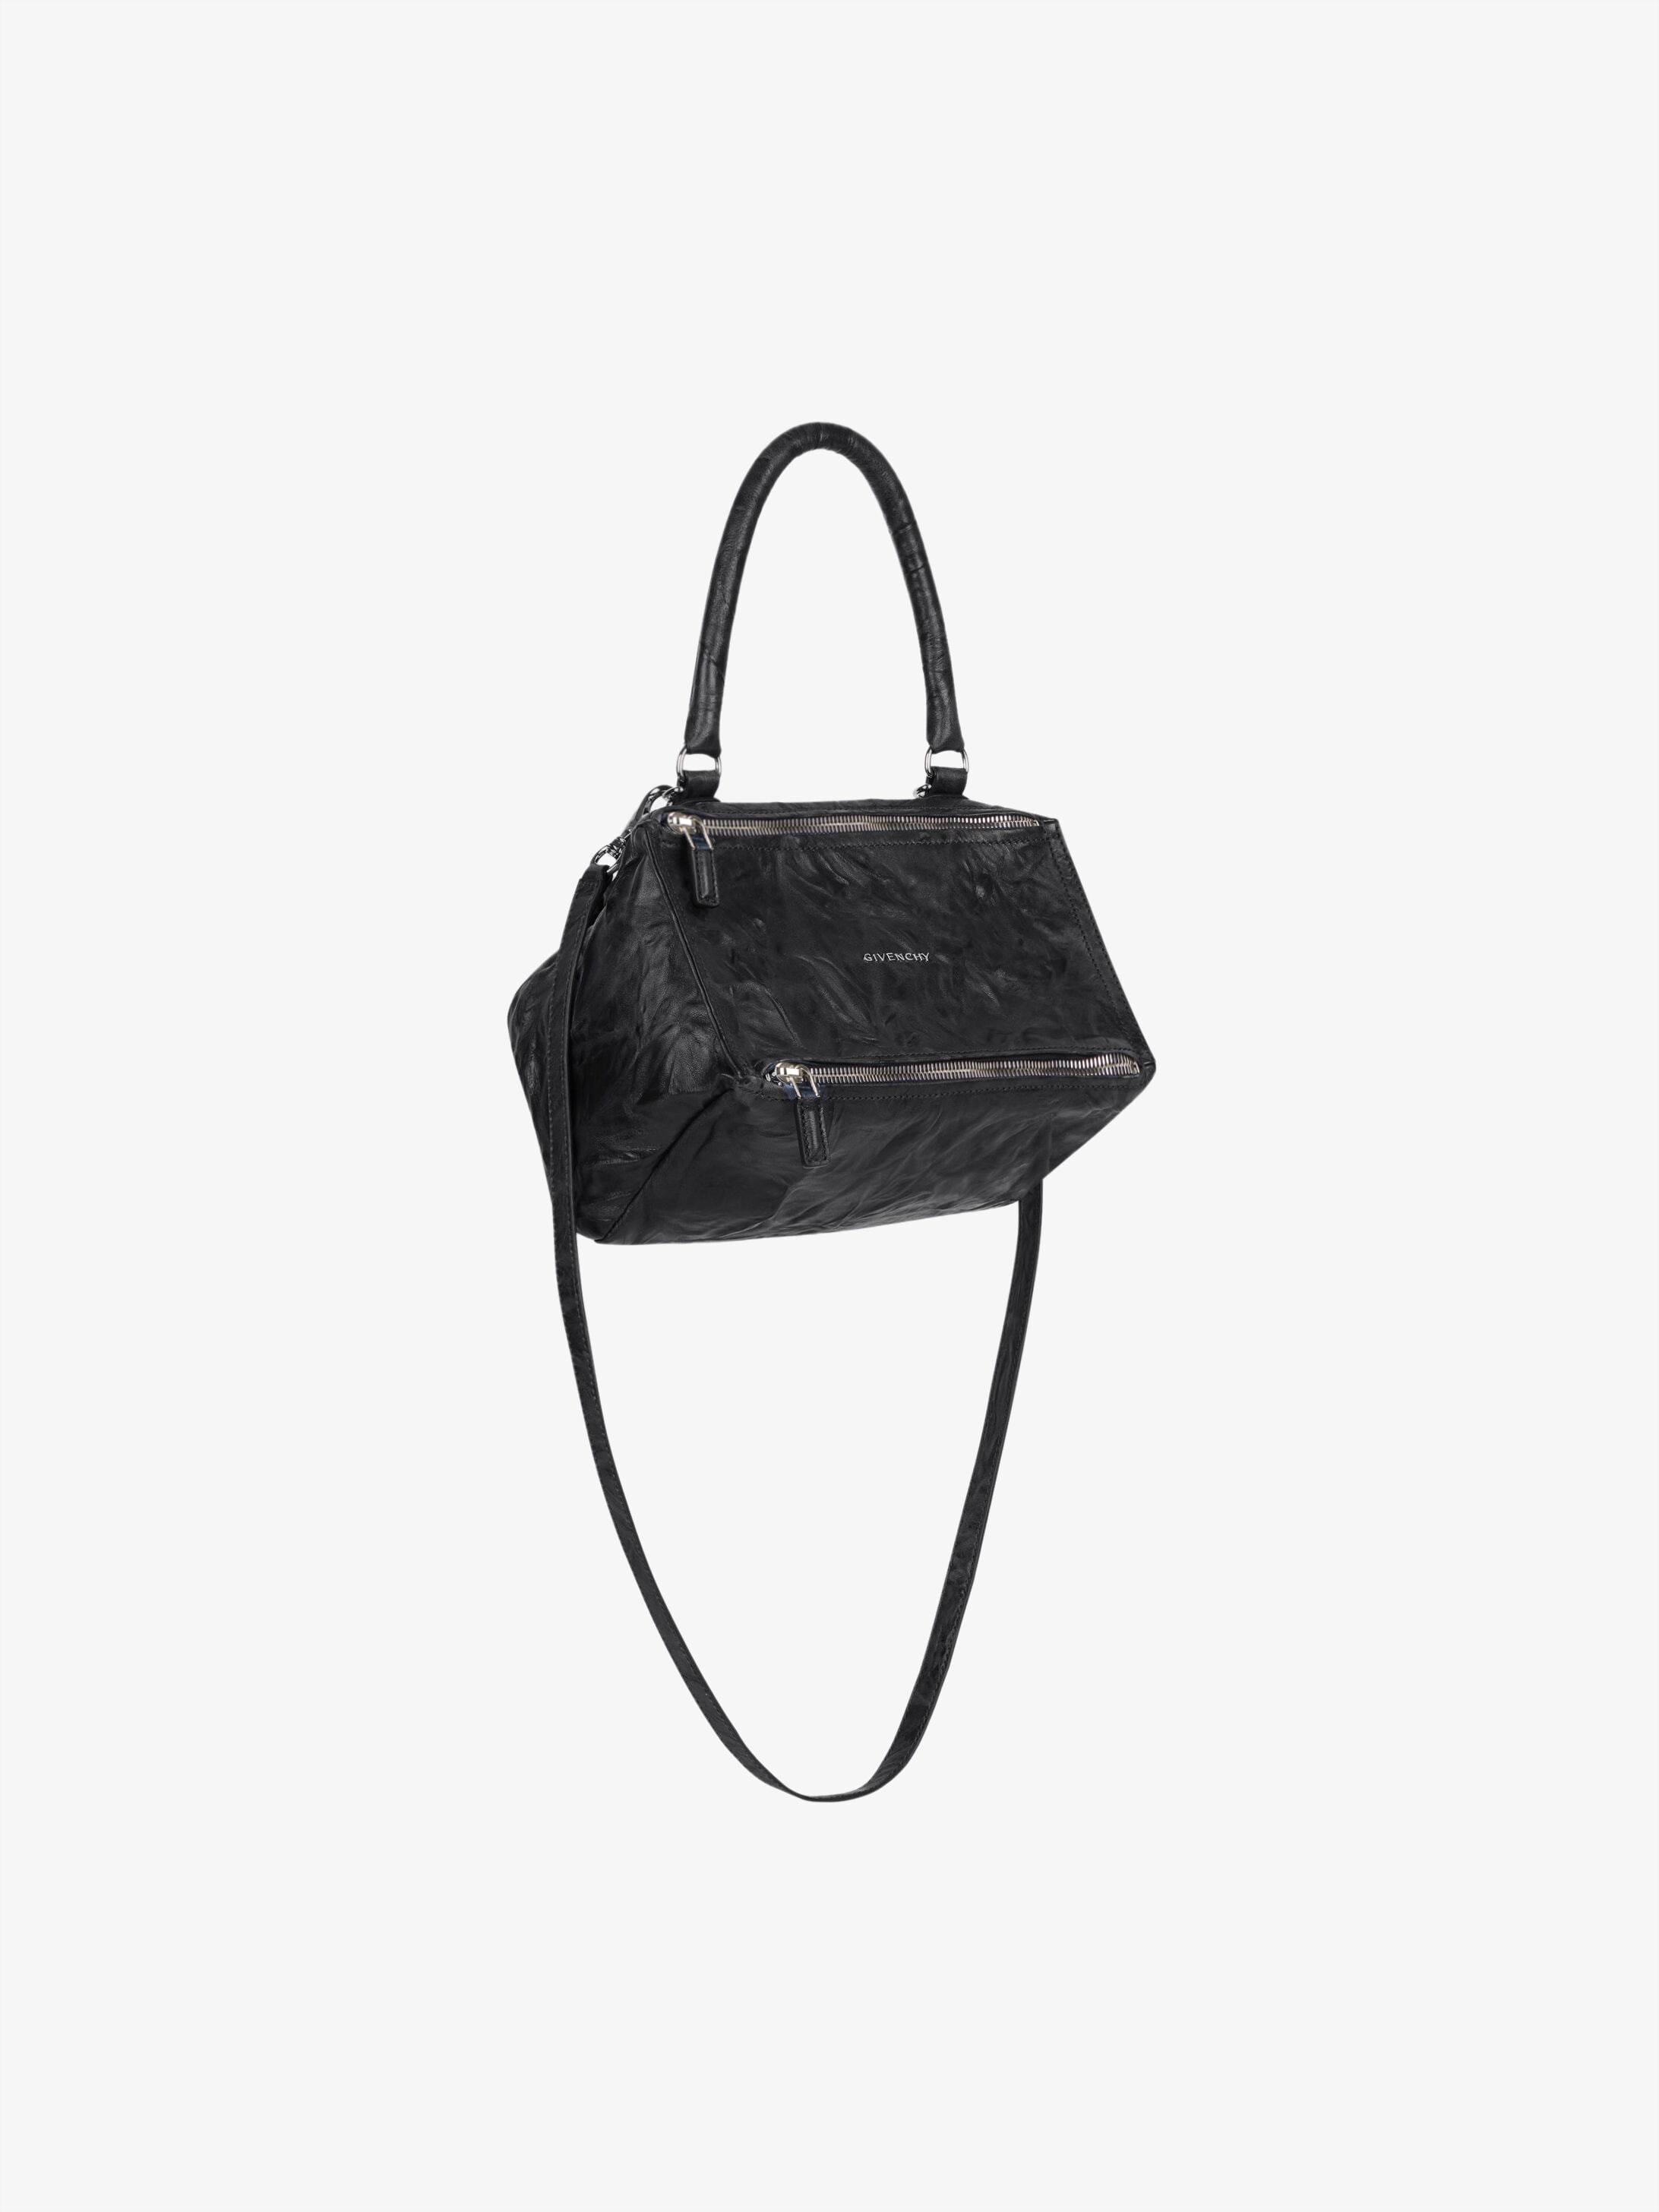 Givenchy Small Pandora bag in aged 